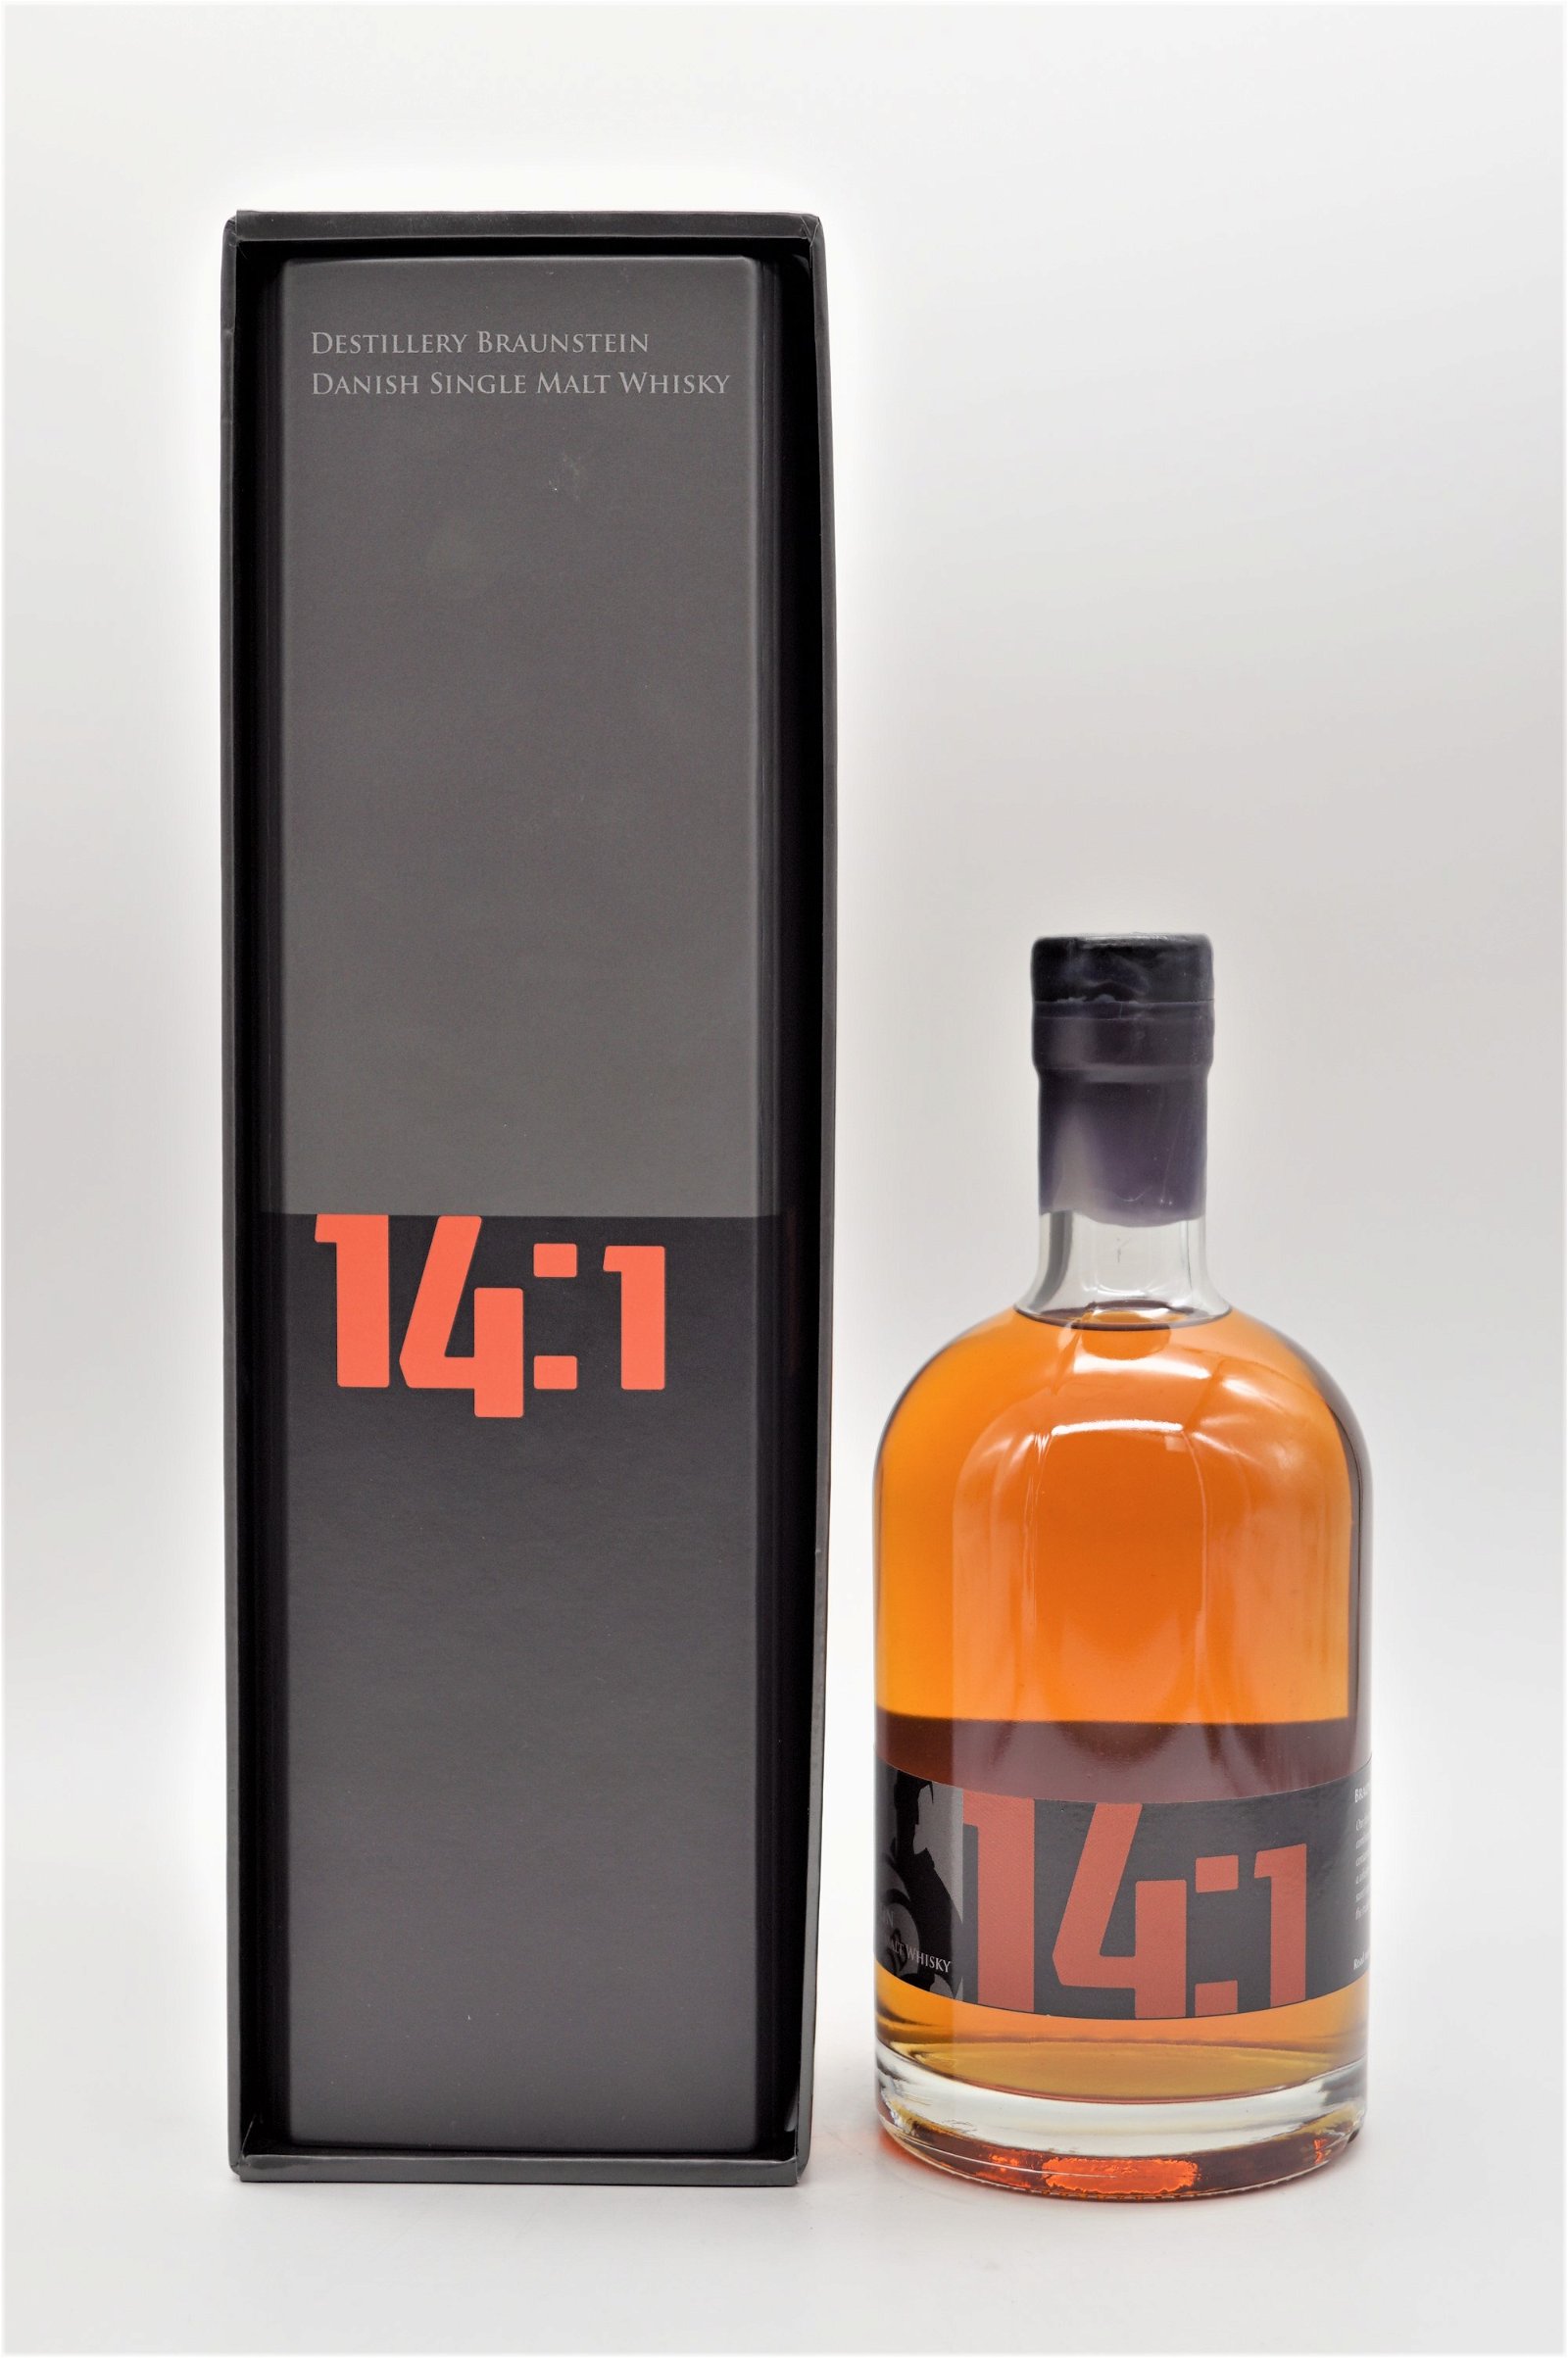 Braunstein Libary Collection 14:1 Dansk Single Malt Whisky